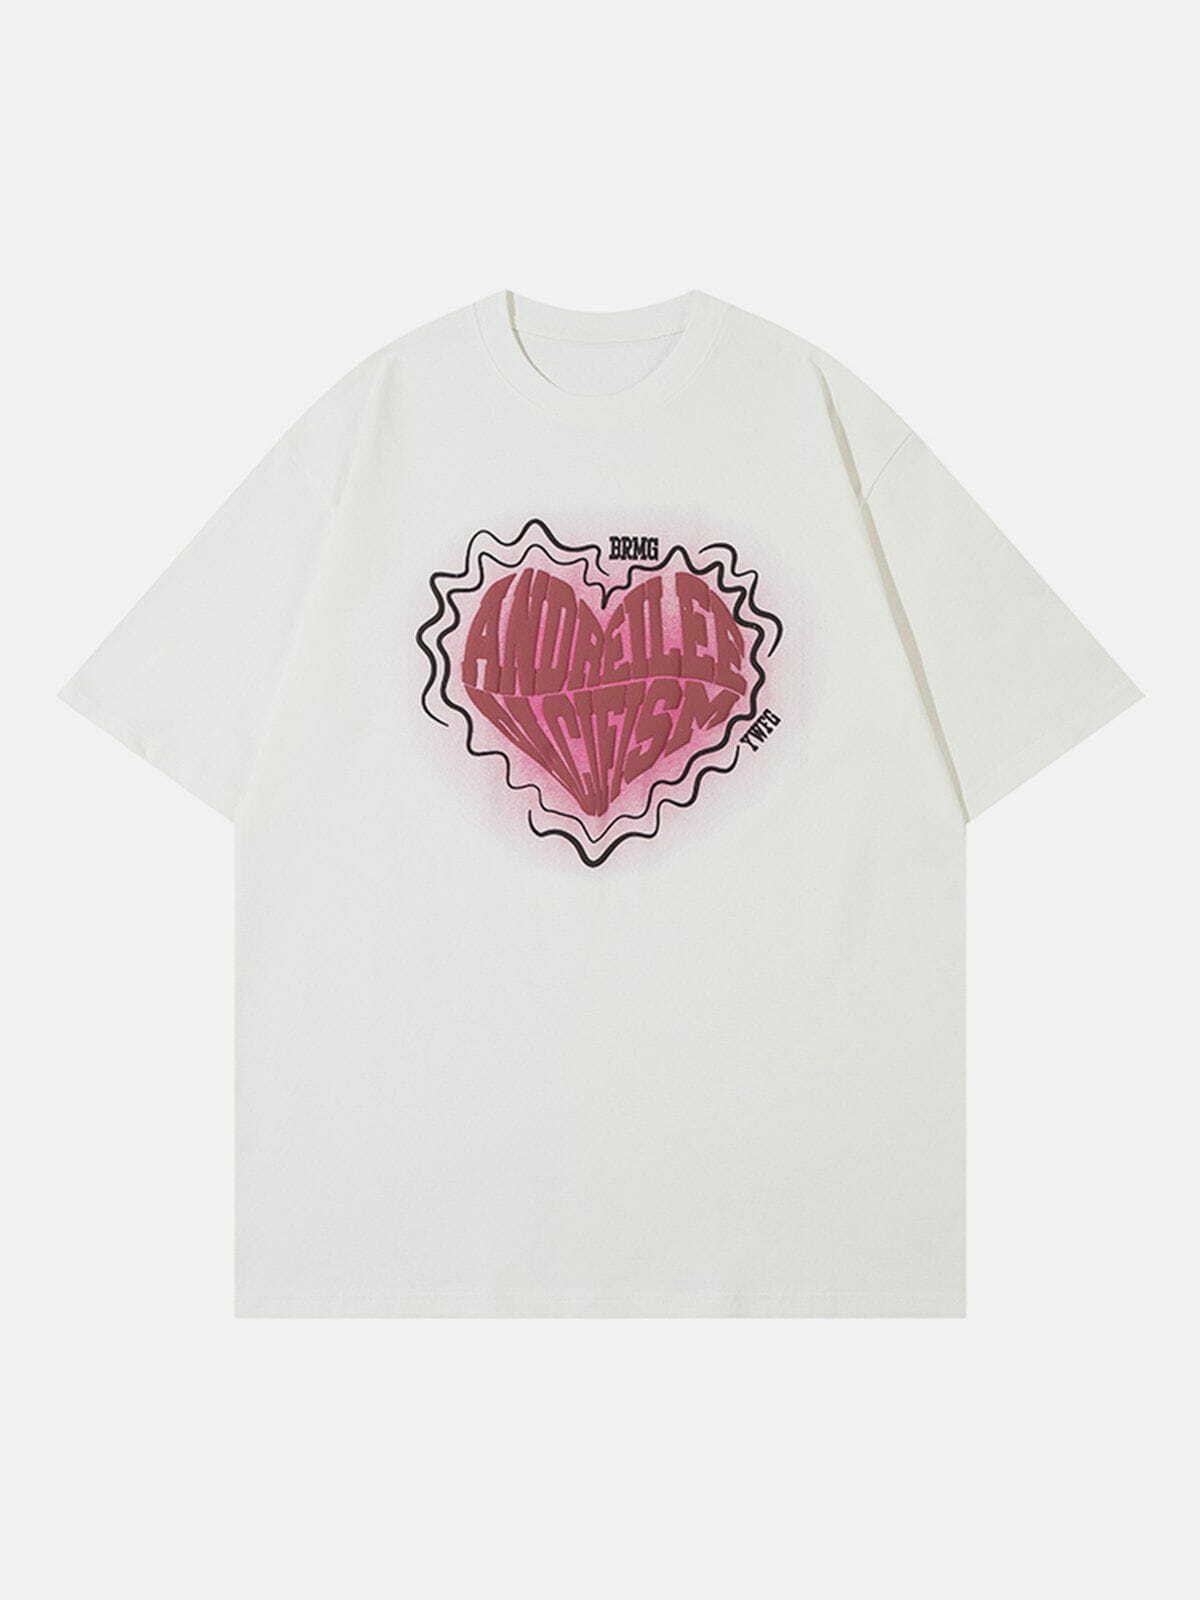 foam heart print tee quirky & vibrant streetwear 2420